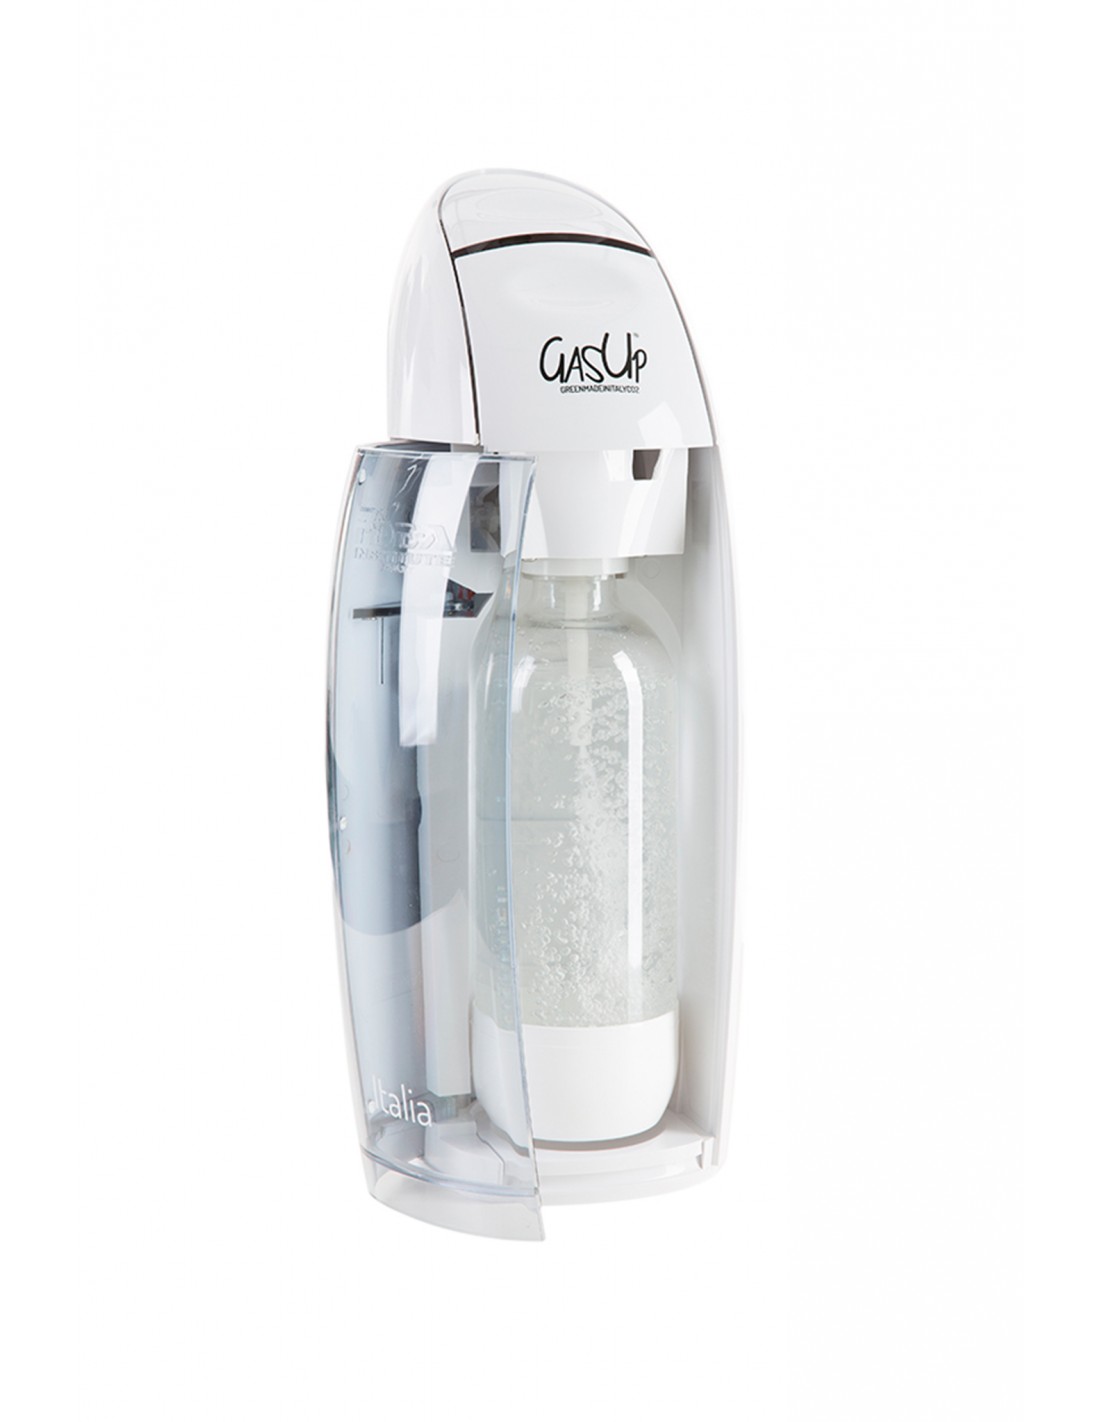 Italia White (Kit Gasificador) - GasUp, GasUp, compatible con todas las  marcas ( GasUp, Philips, Sodastream, entre otras)